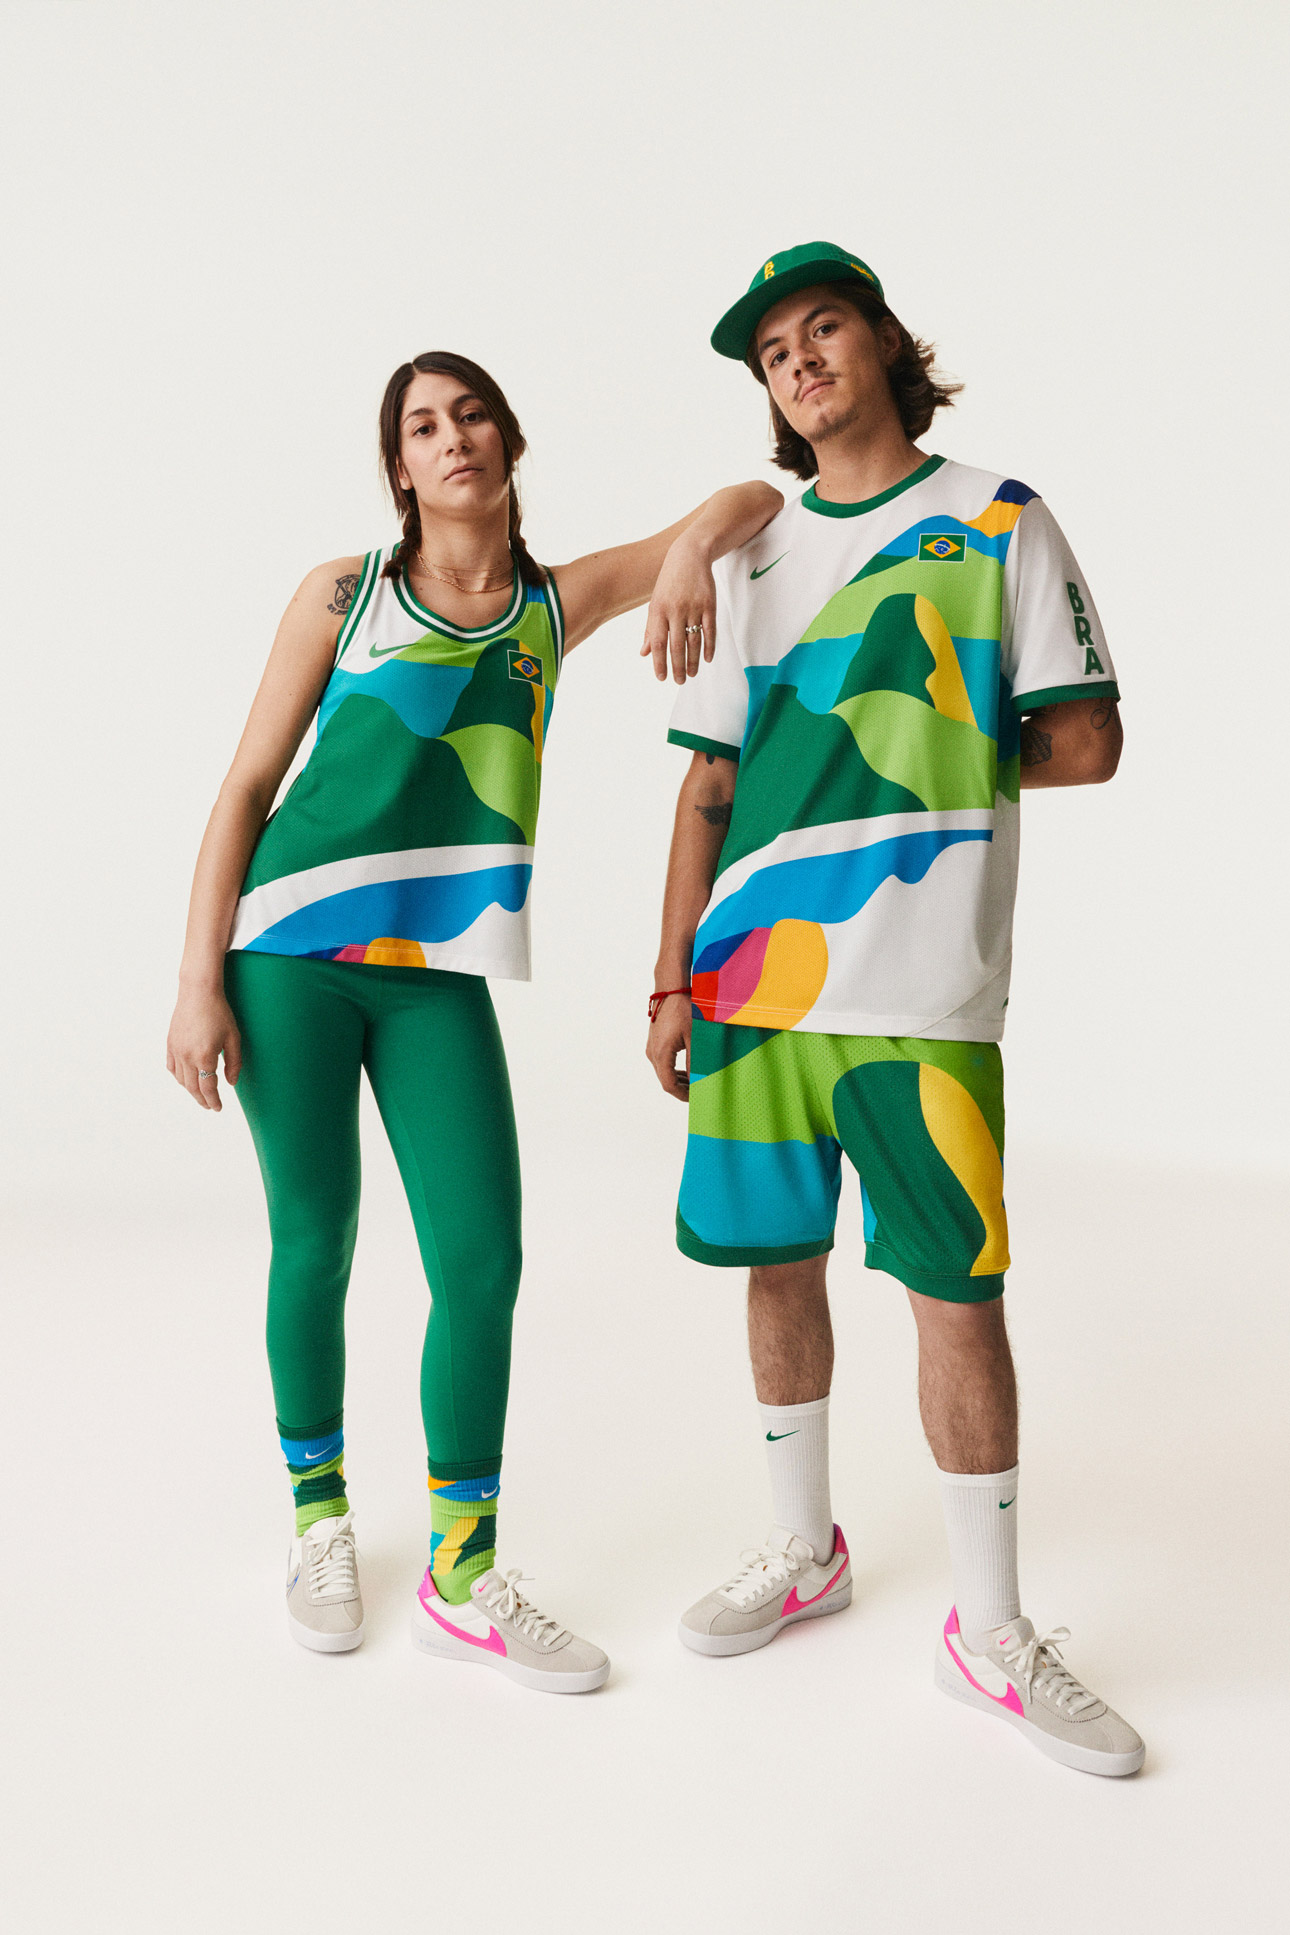 Pertenece de repuesto Último Nike SB unveil Olympic skateboarding uniforms - Yeah Girl